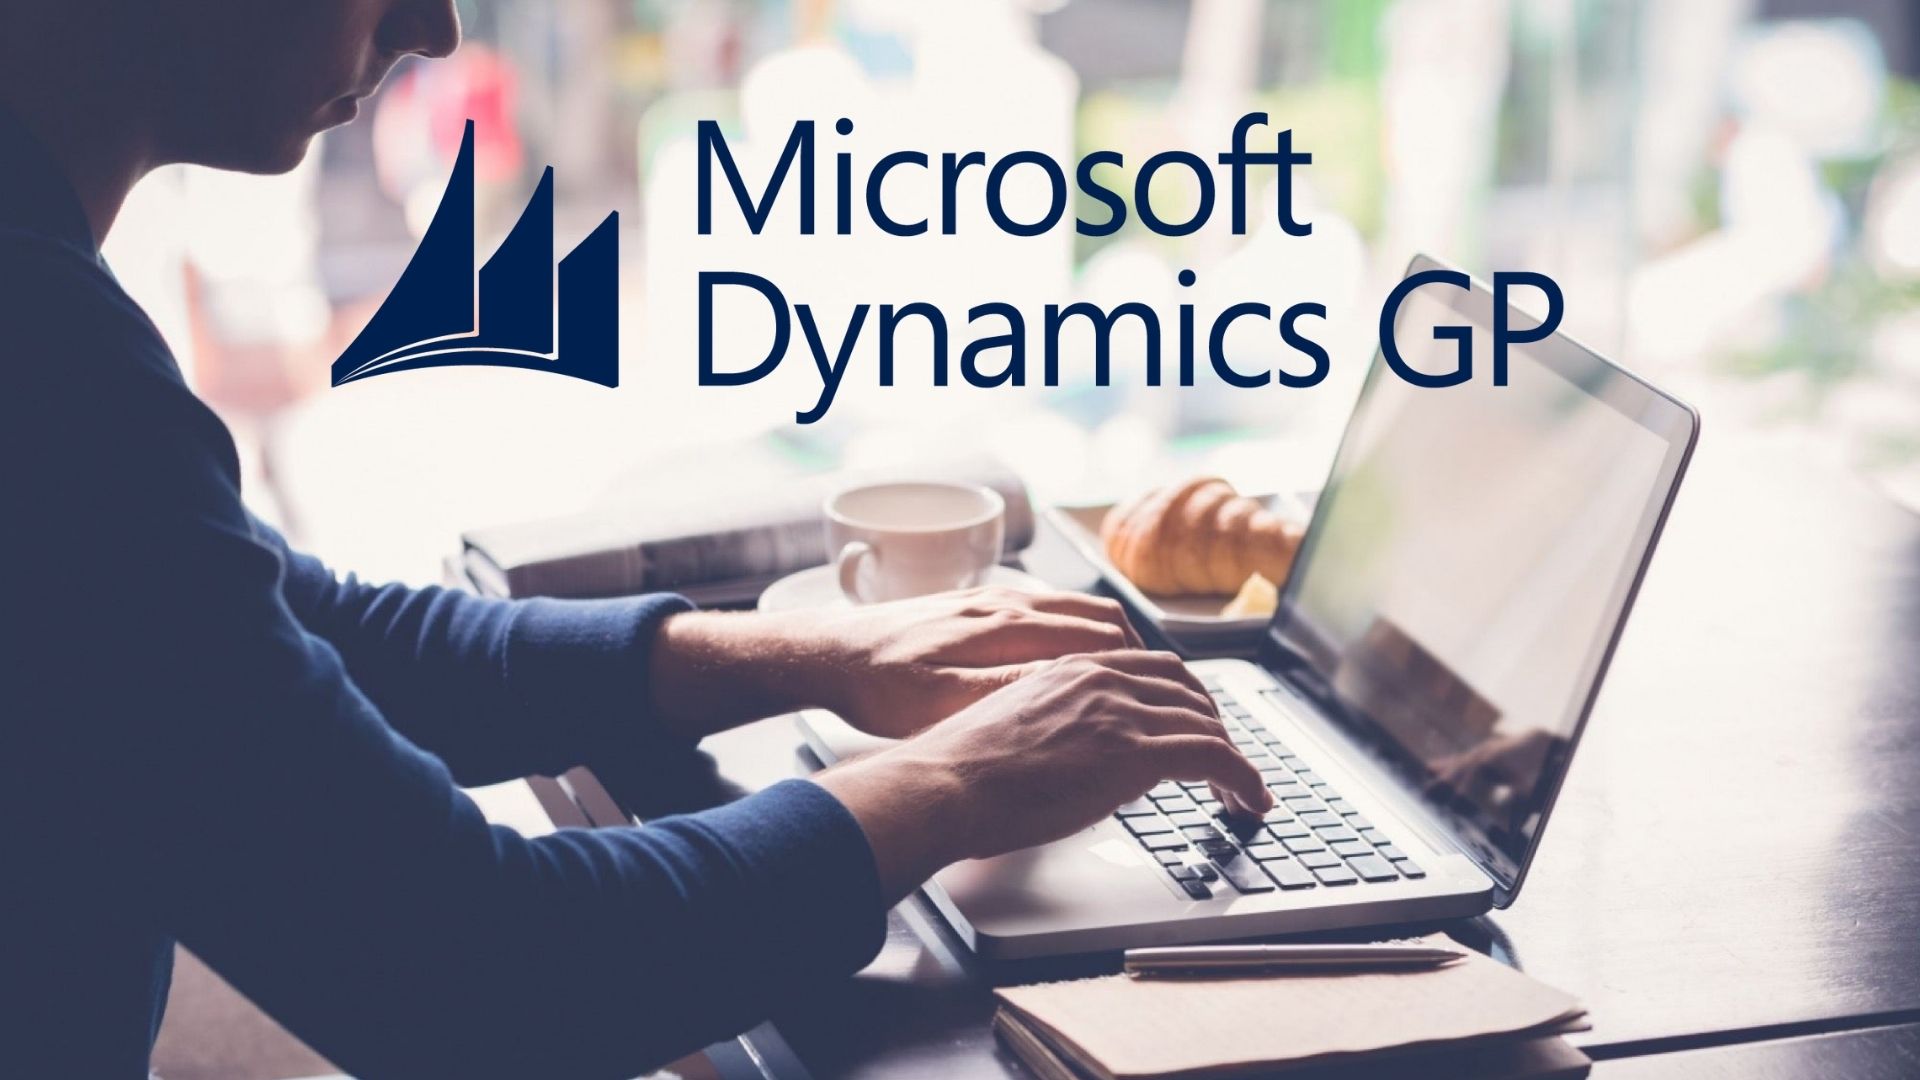 What is Microsoft Dynamics GP